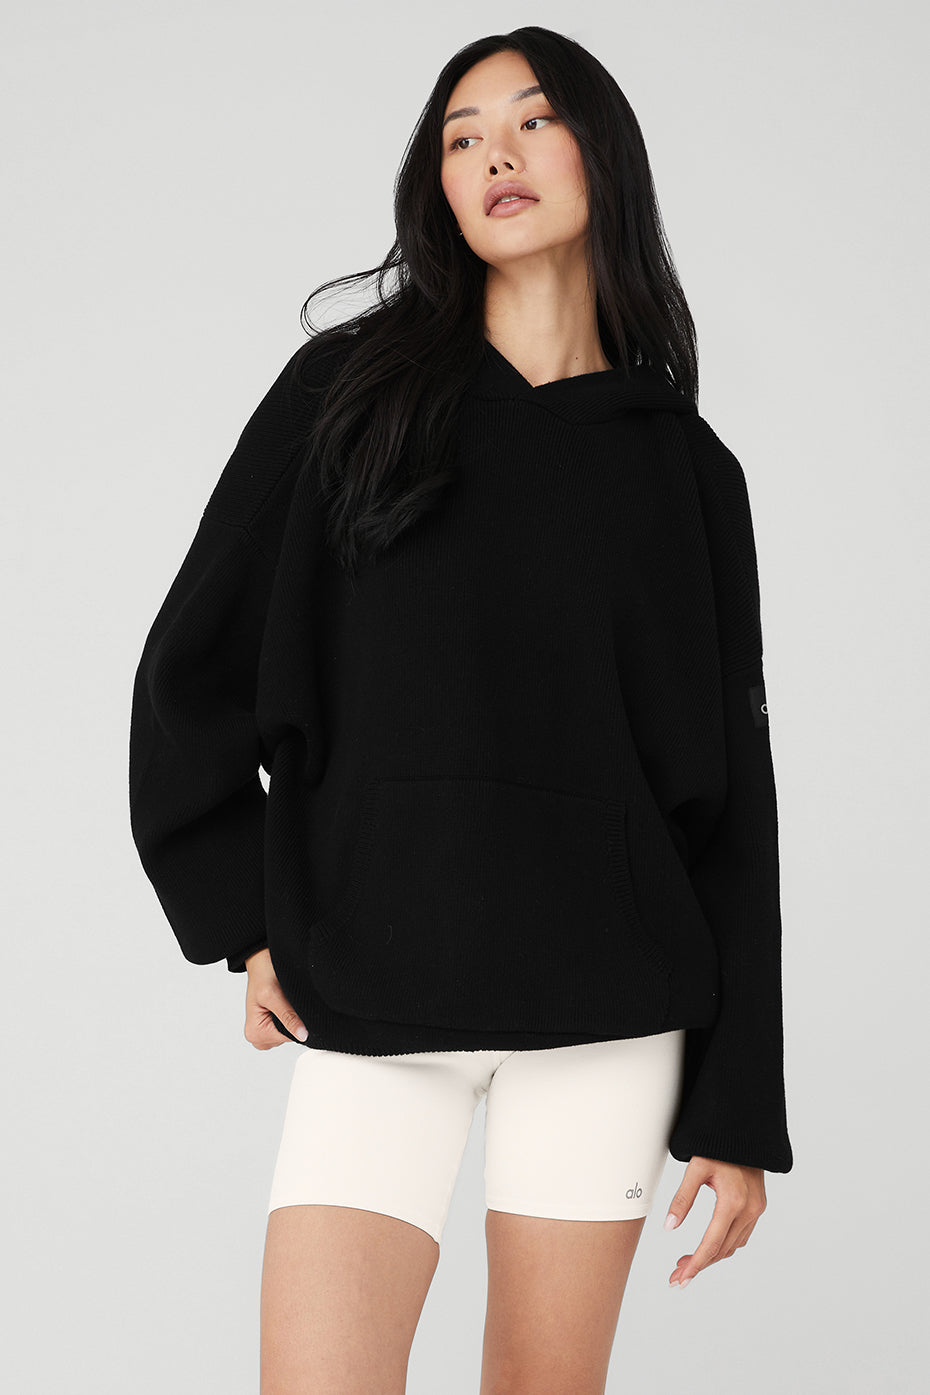 Scholar Hooded Sweater - Black - Black / XS